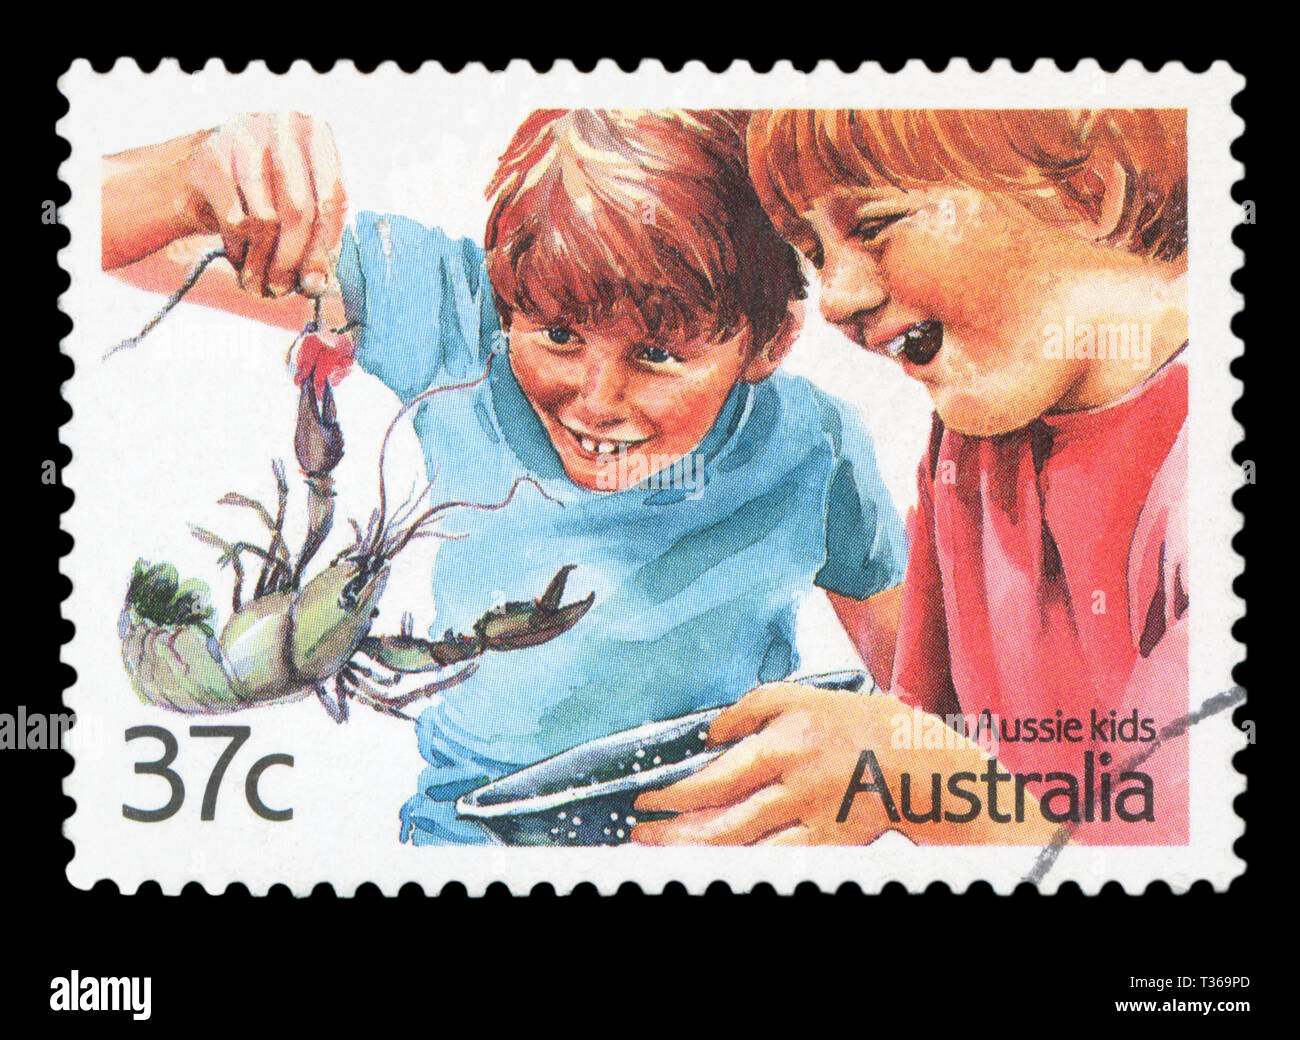 AUSTRALIA - CIRCA 1987: A stamp printed in Australia shows the Crayfishing, Aussie Kids, circa 1987 Stock Photo